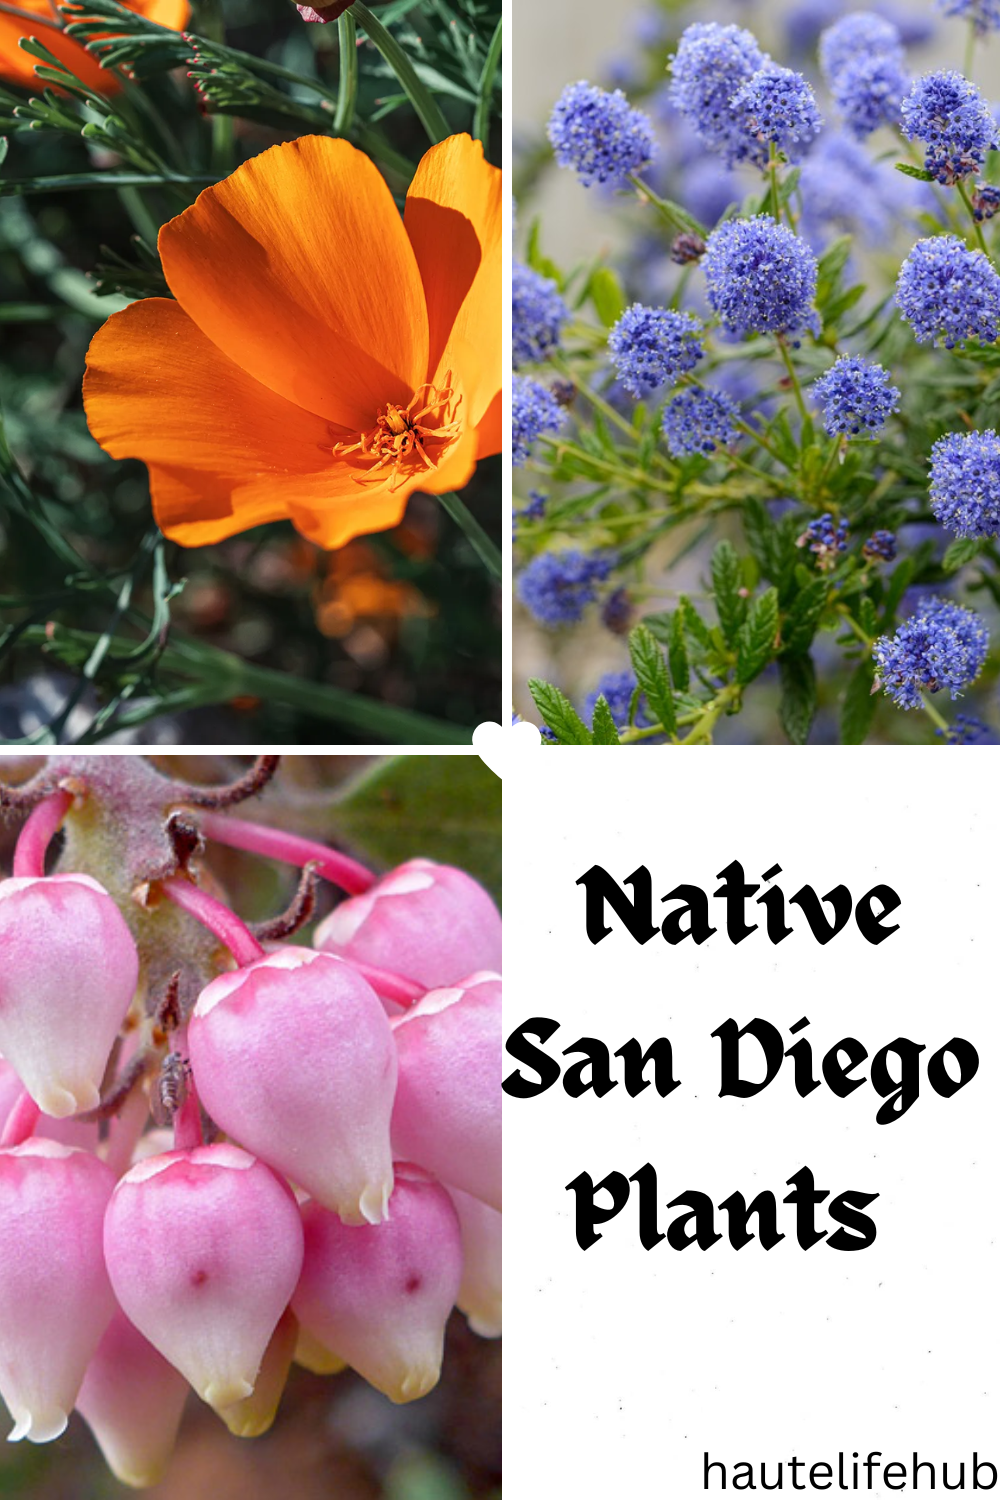 Native San Diego Plants